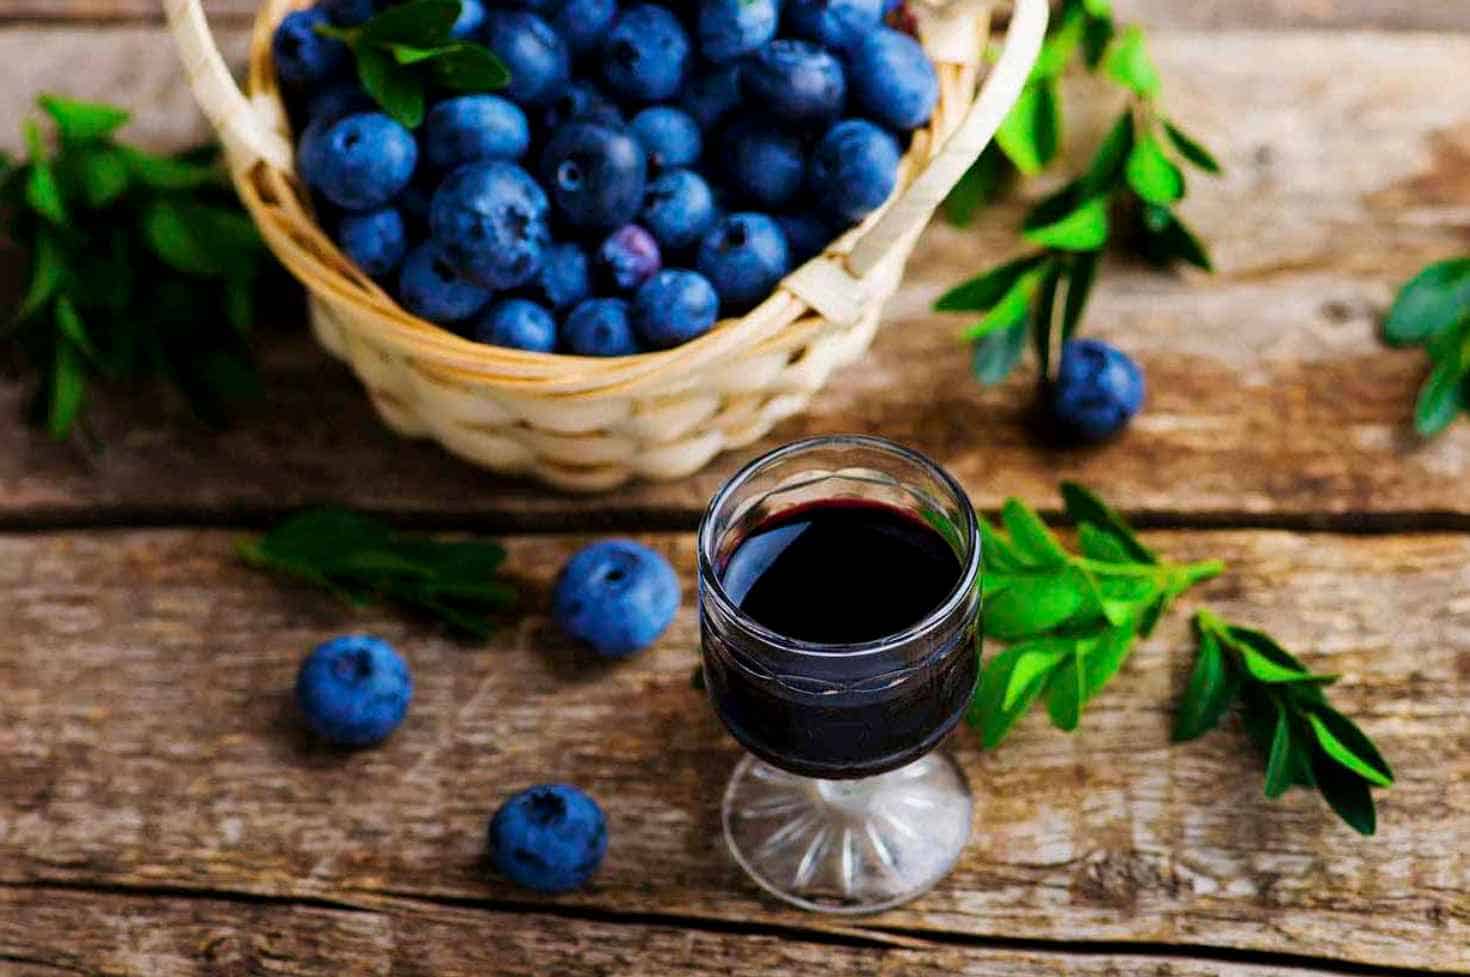 Steps To Make Blueberry Wine